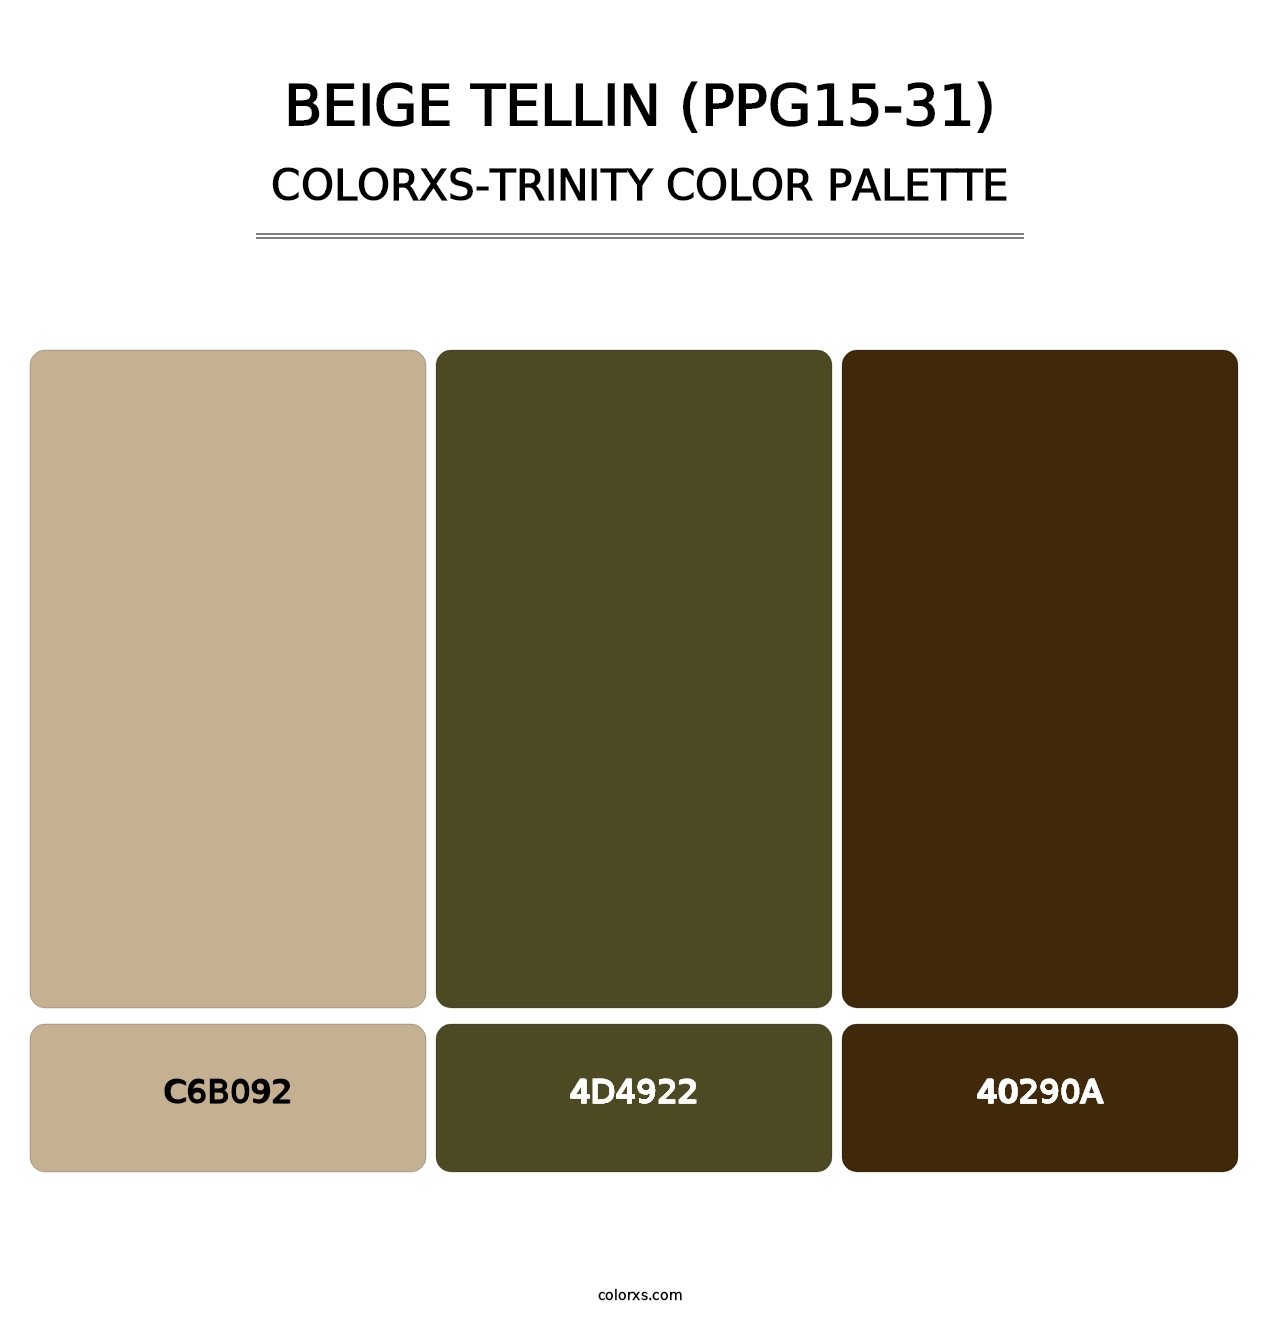 Beige Tellin (PPG15-31) - Colorxs Trinity Palette